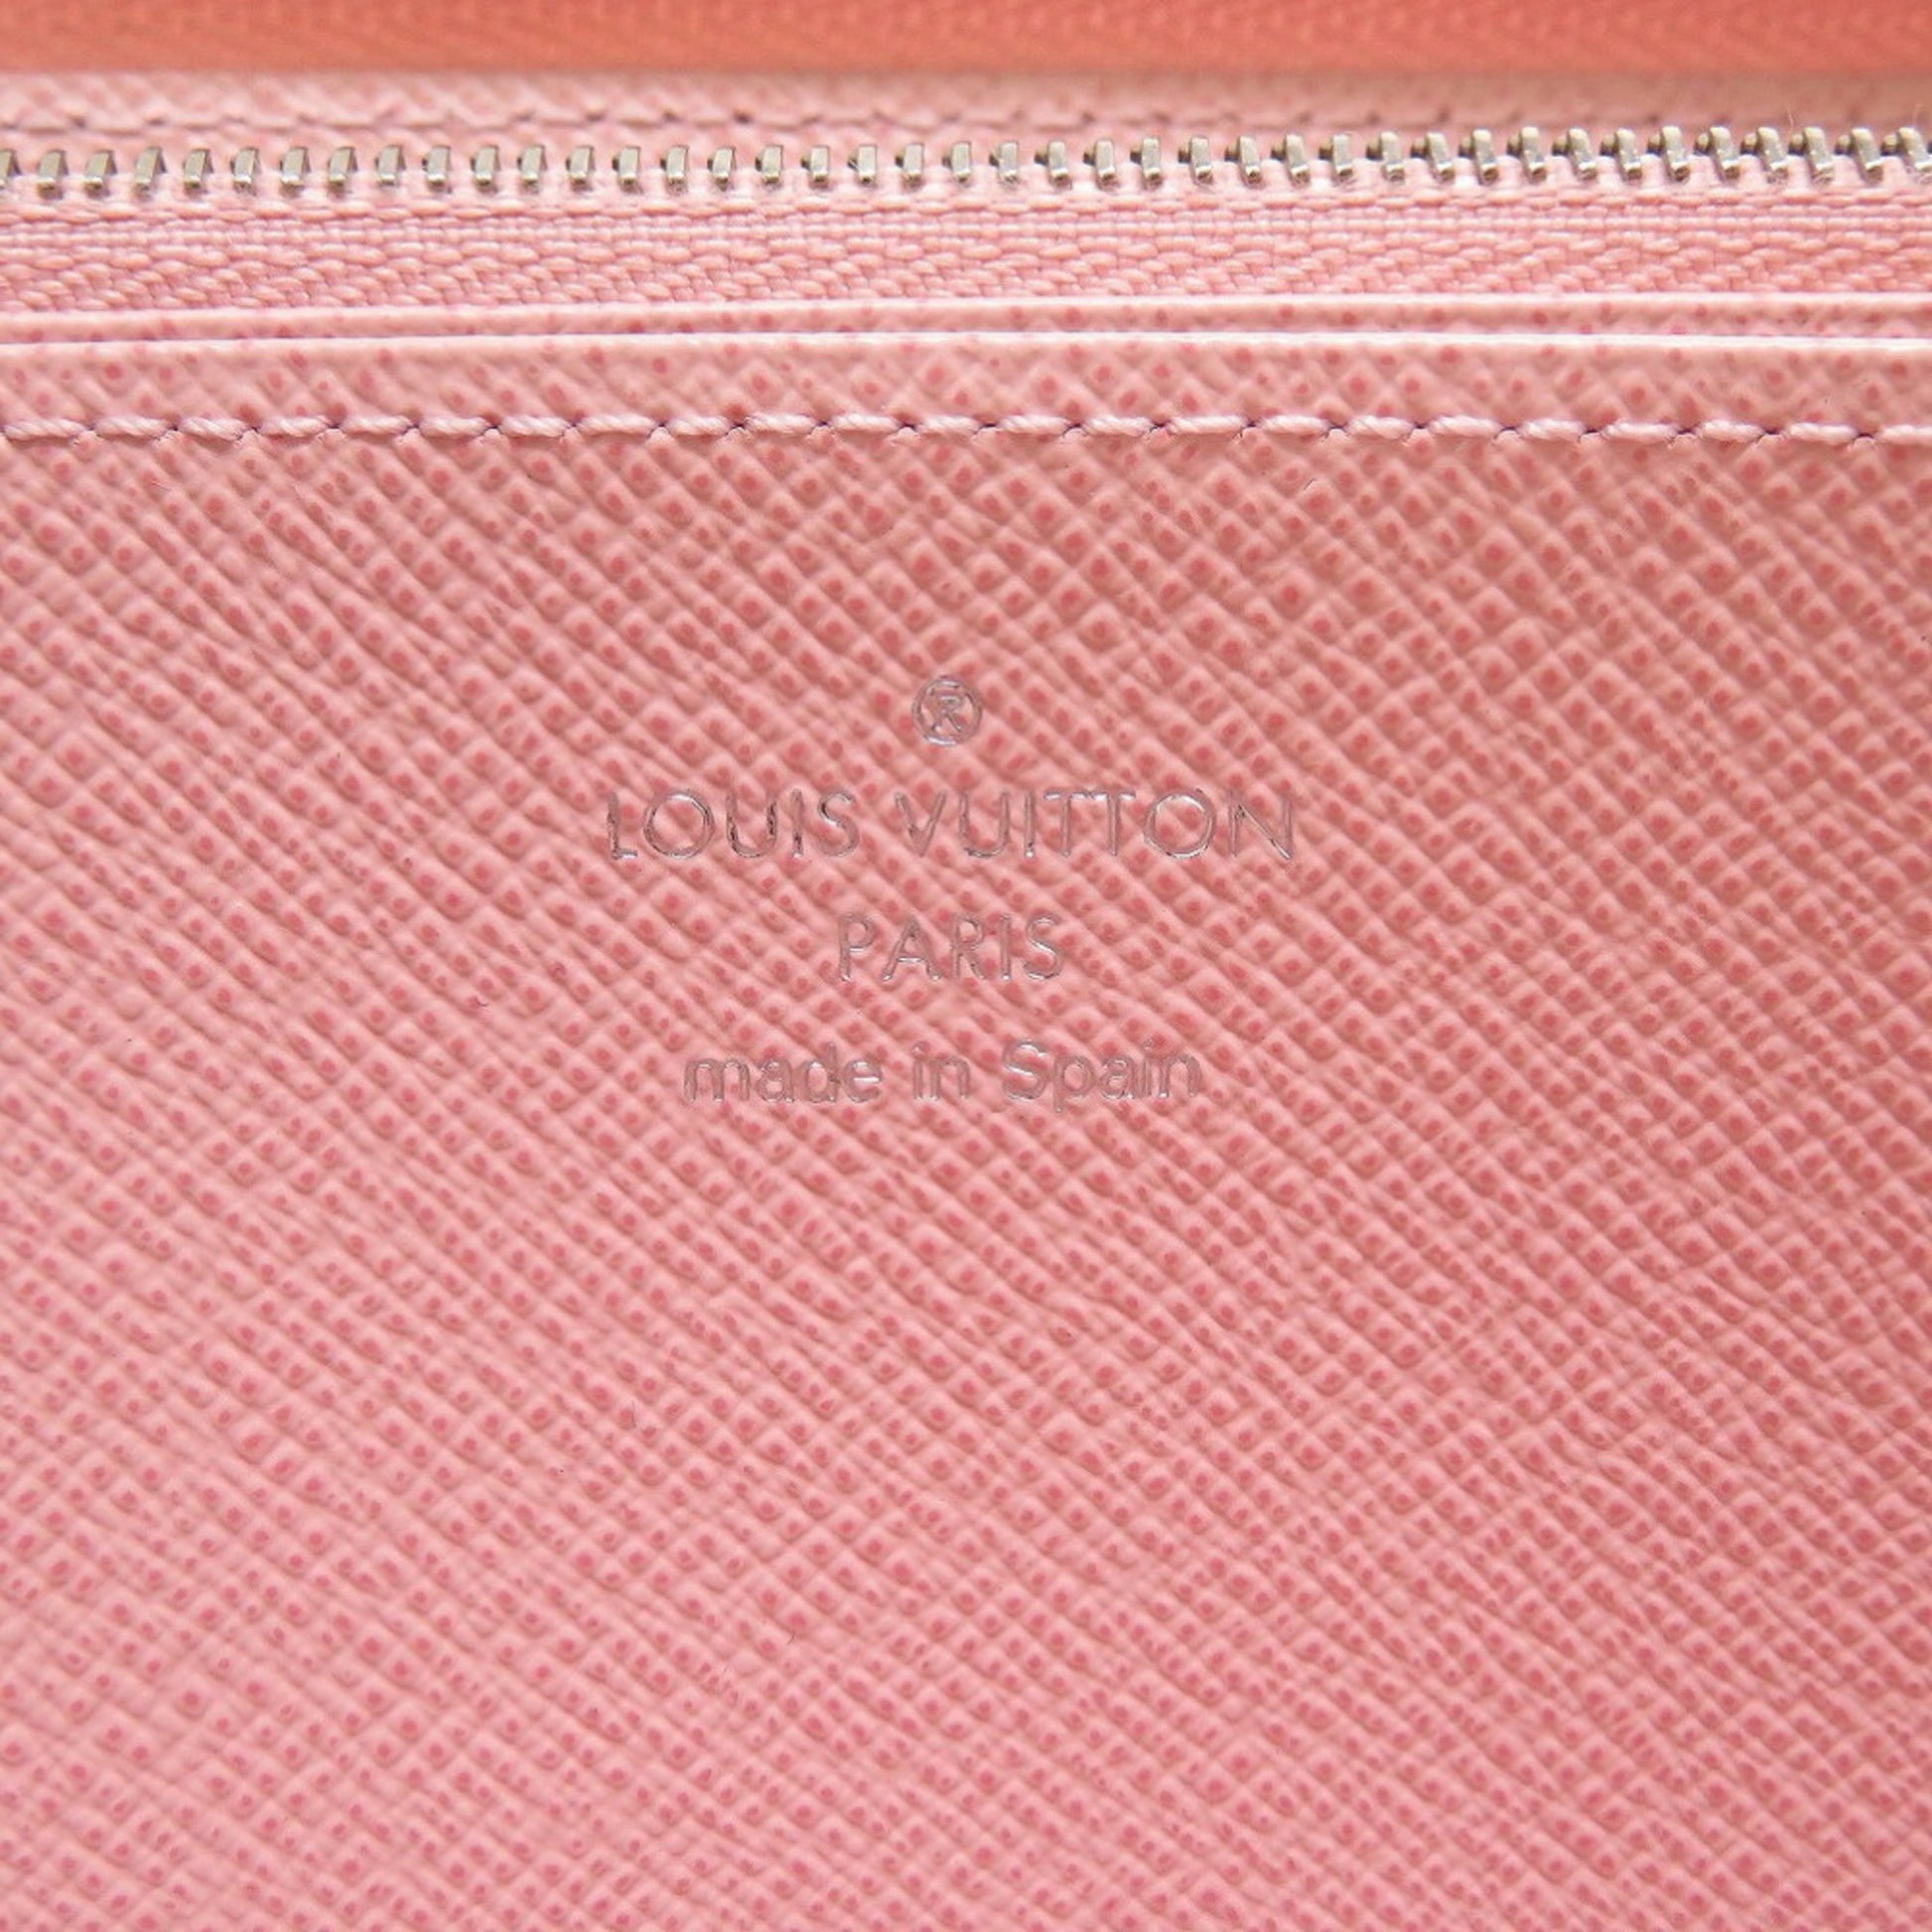 Louis Vuitton Rose Ballerine Epi Leather and Monogram Canvas